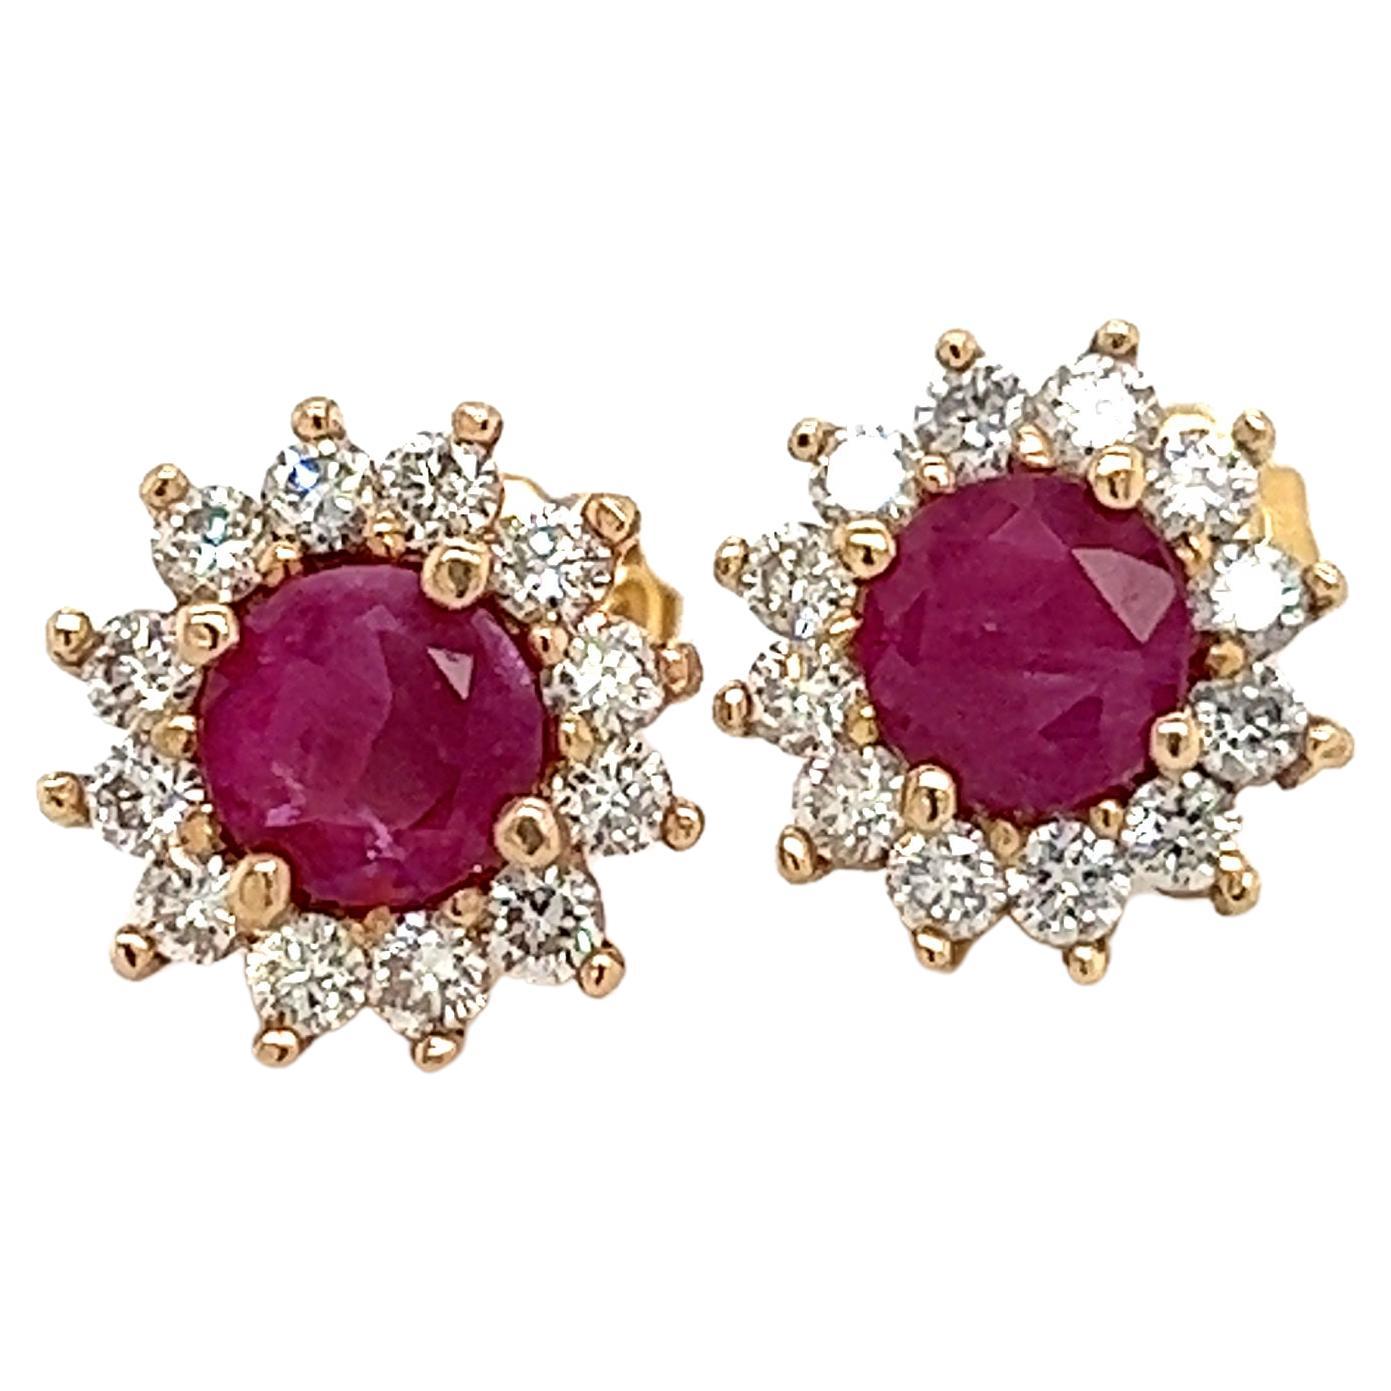 Natural Ruby Diamond Earrings 14k Yellow Gold 2.20 TCW Certified